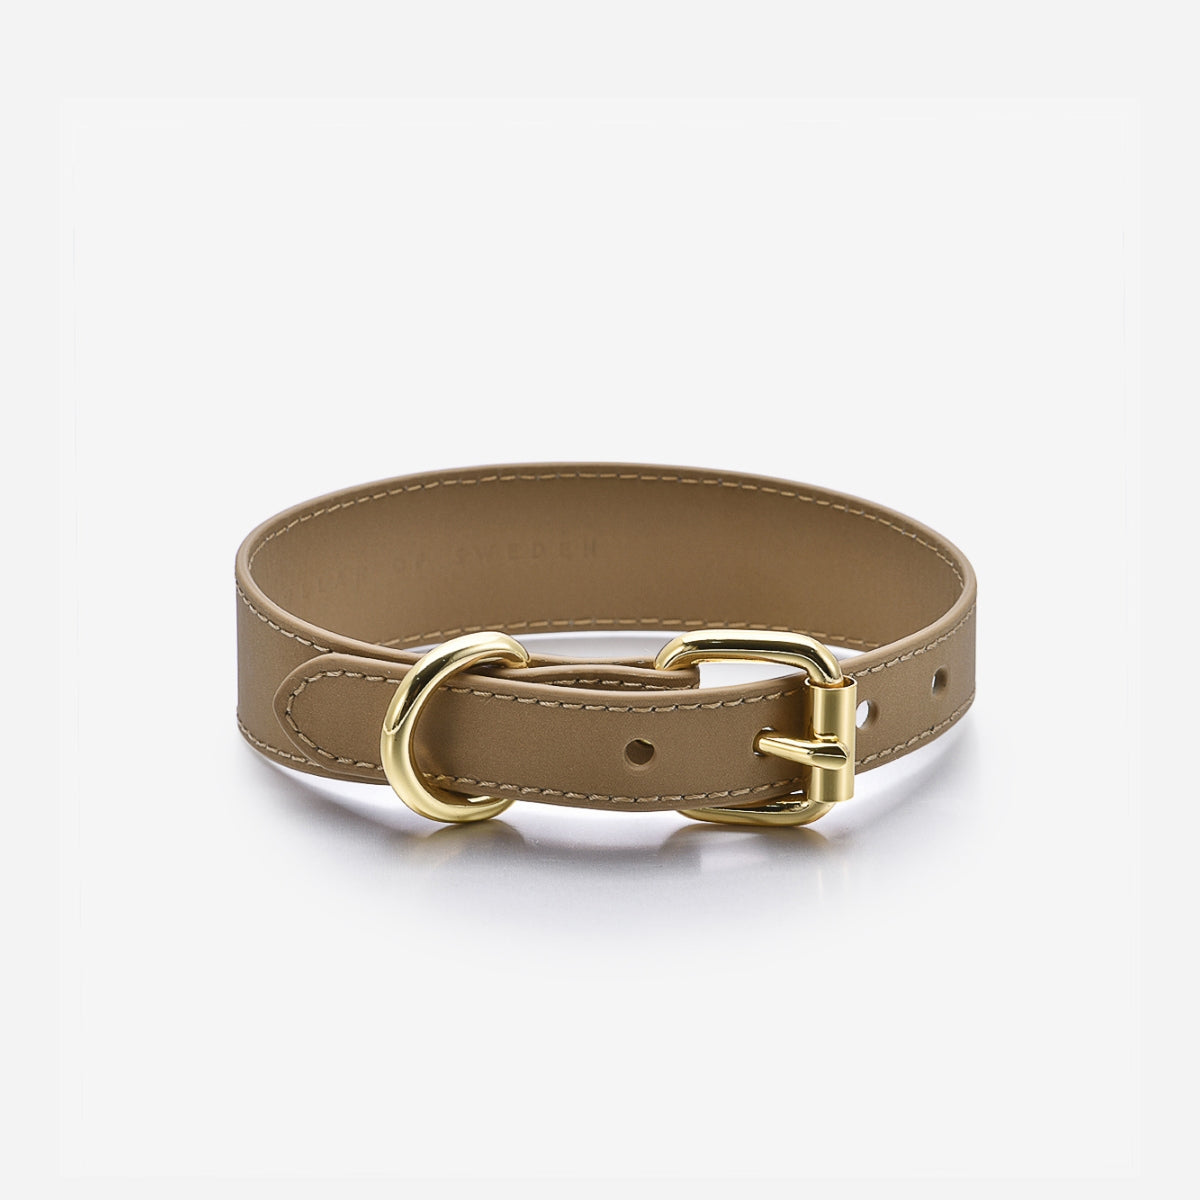 reflective-bronze-dog-collar-medium-thin-buckle.jpg